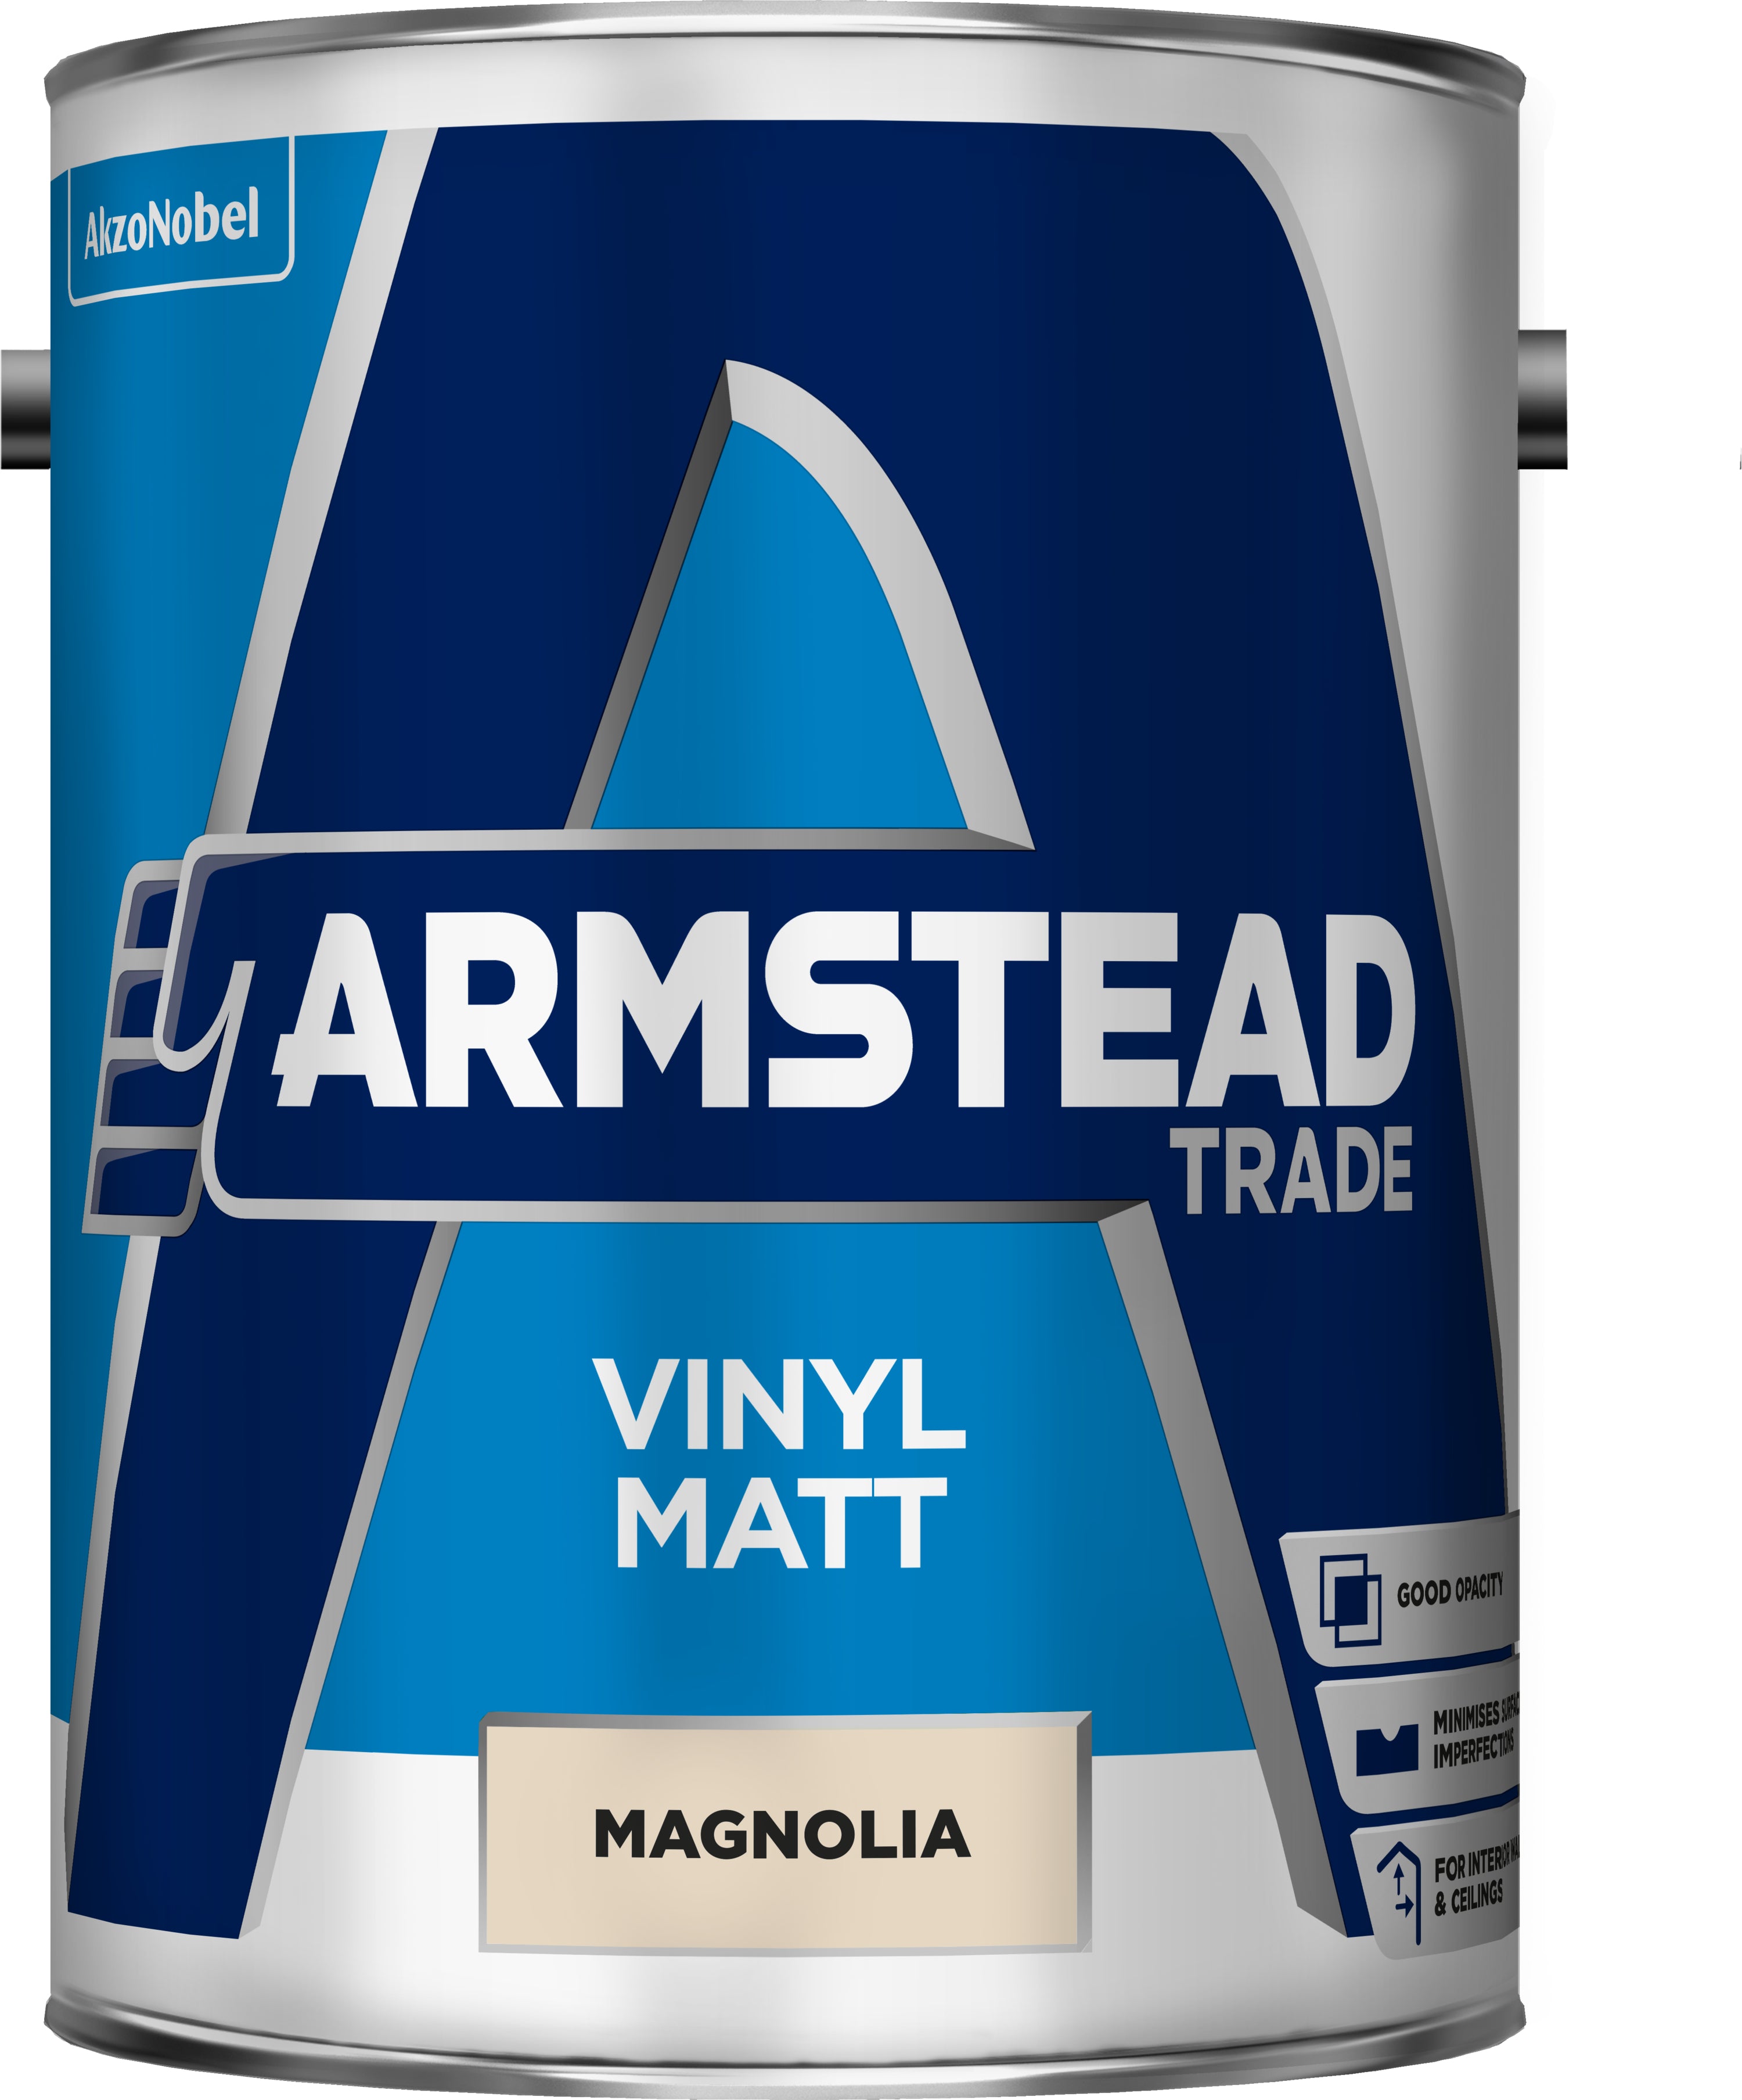 Armstead Trade Vinyl Matt Magnolia 5L